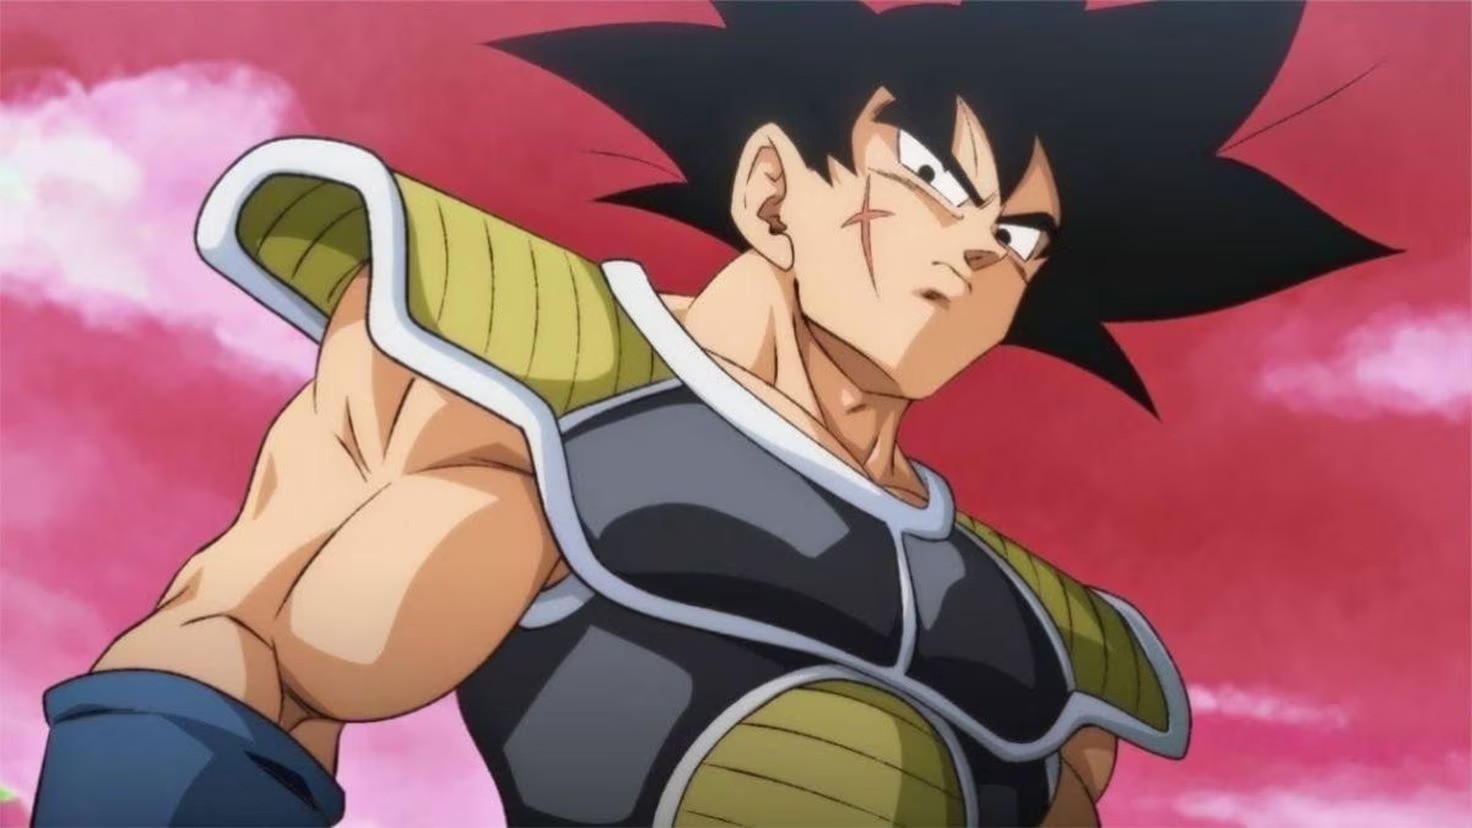 Goku's father, Bardock